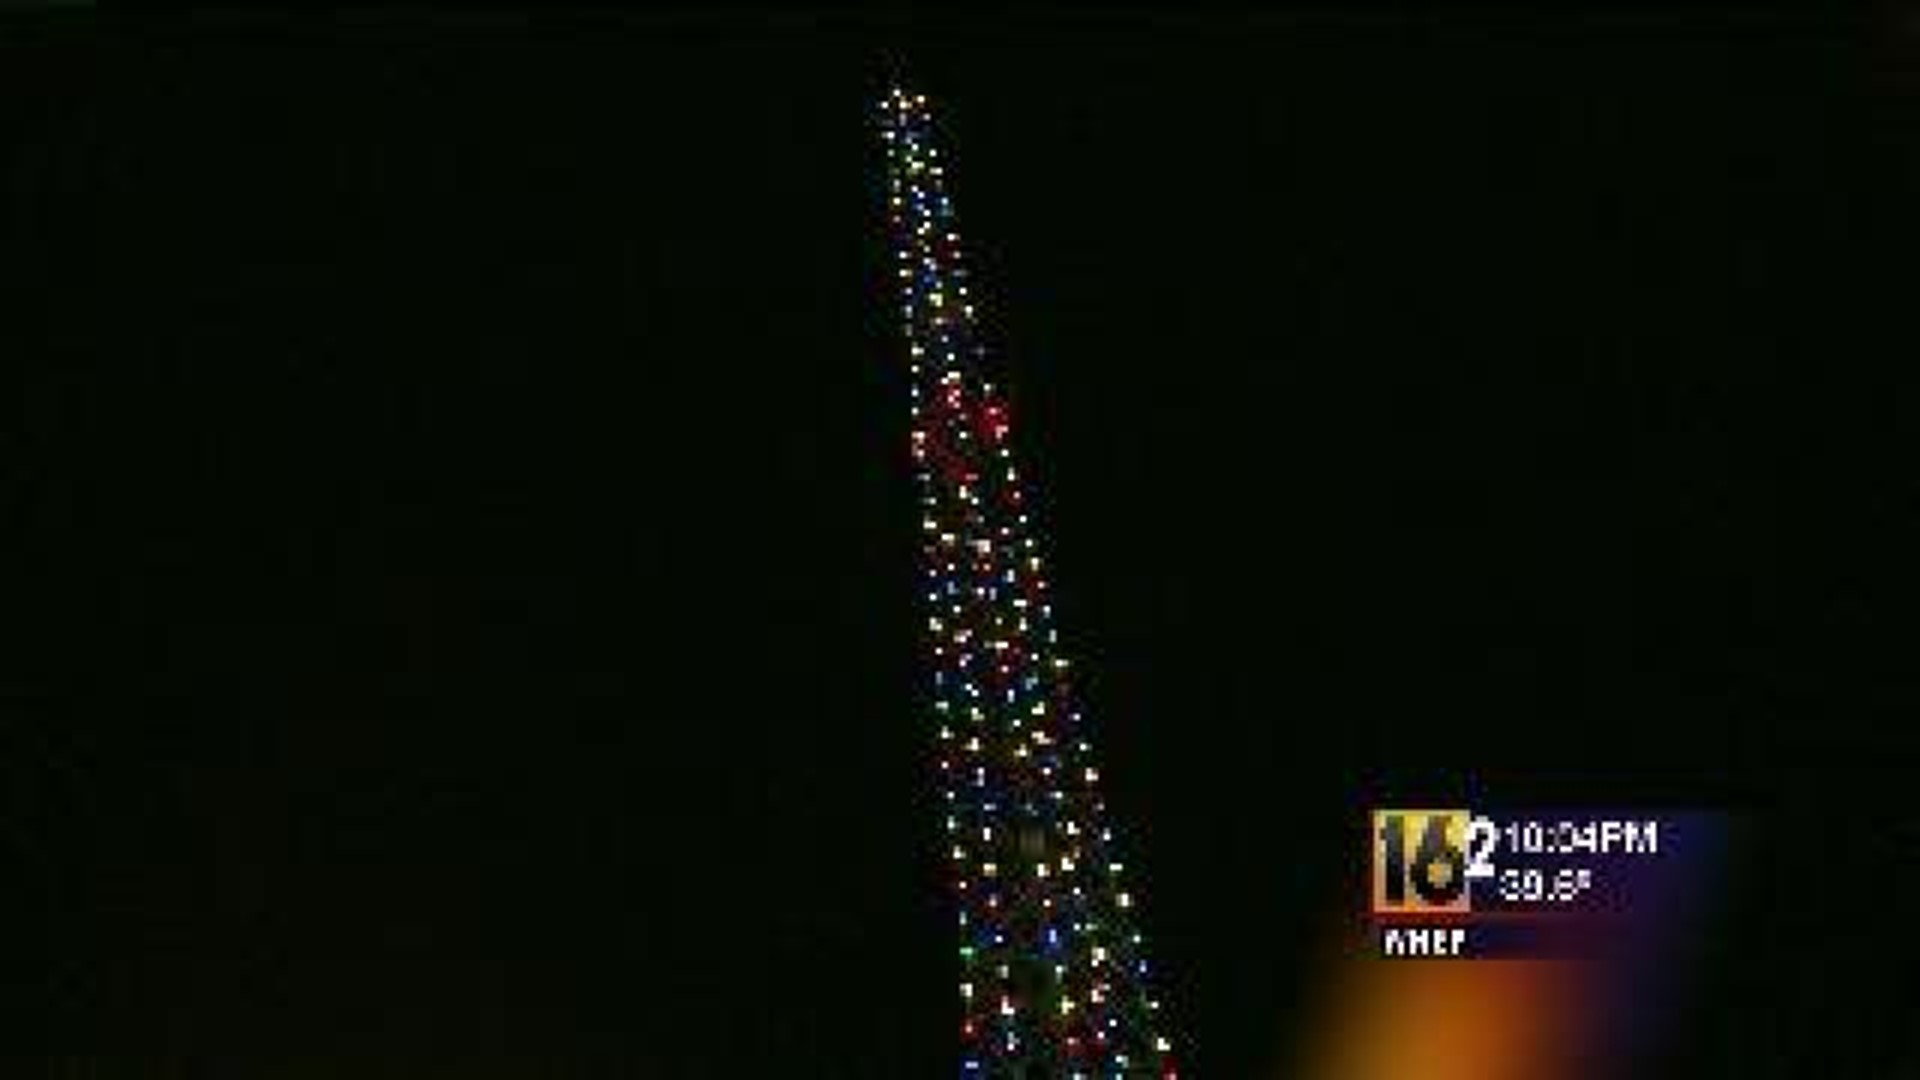 Annual Tower Lighting Marks Holiday Season